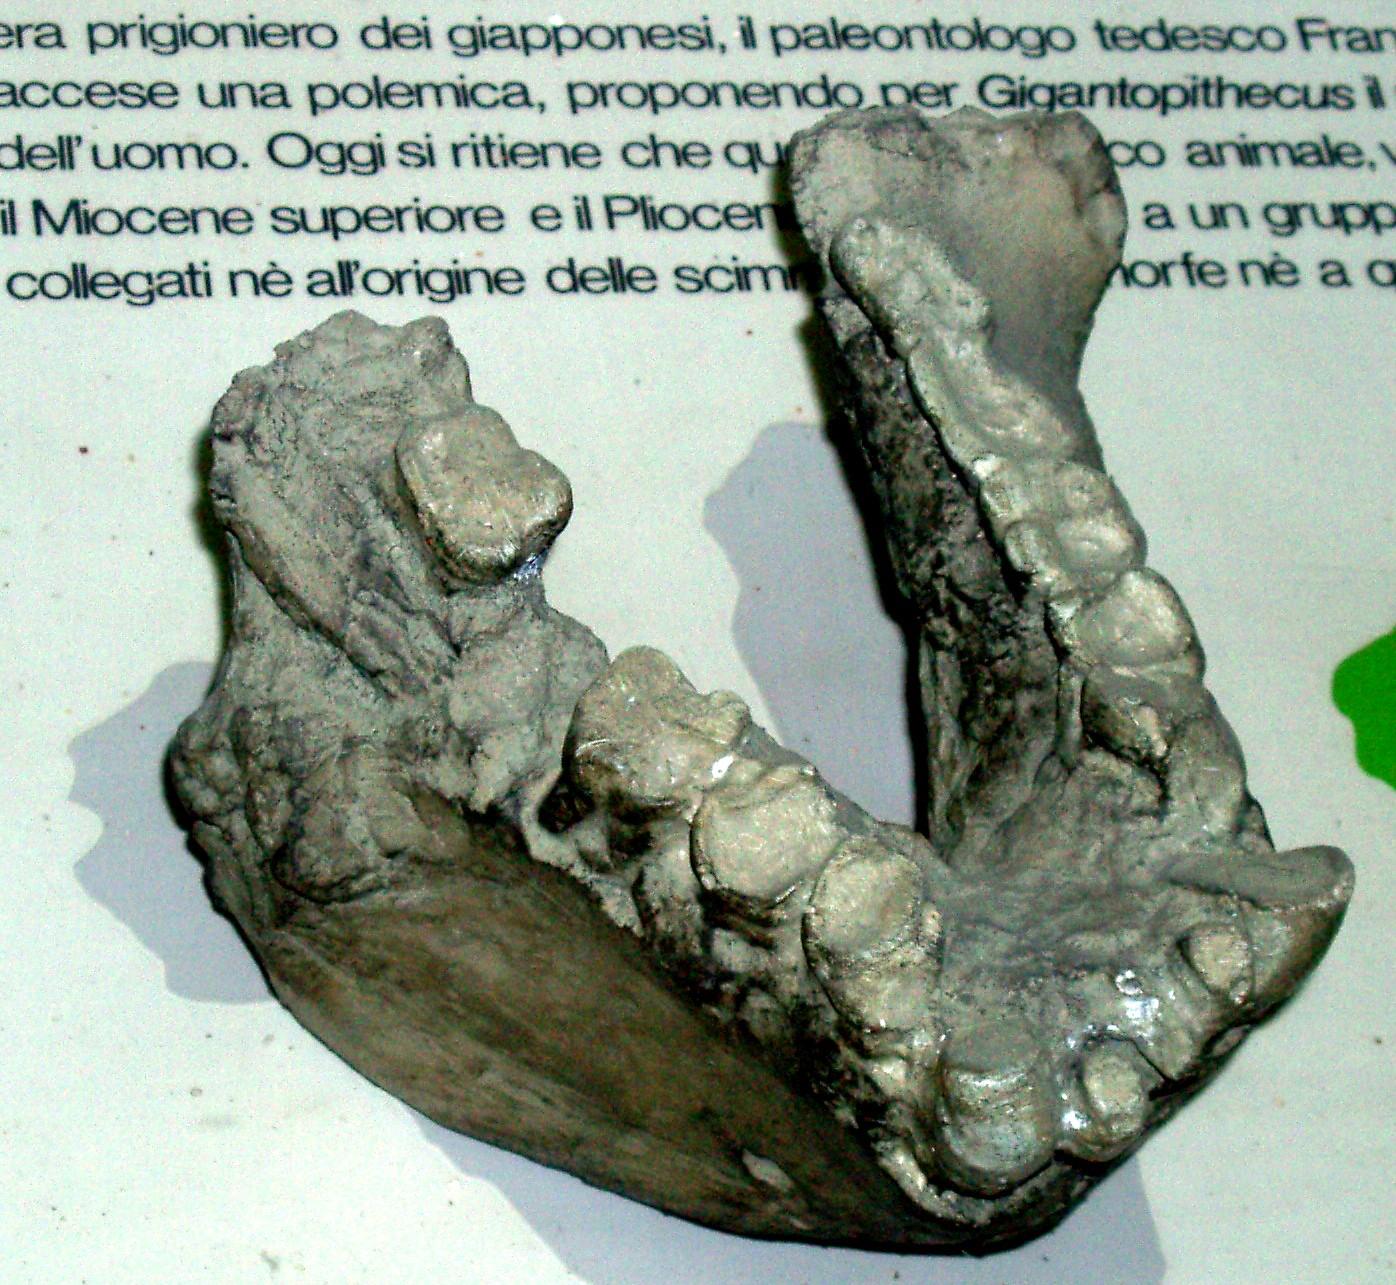 Gigantopithecus: A controversial prehistoric evidence of the Bigfoot! 3